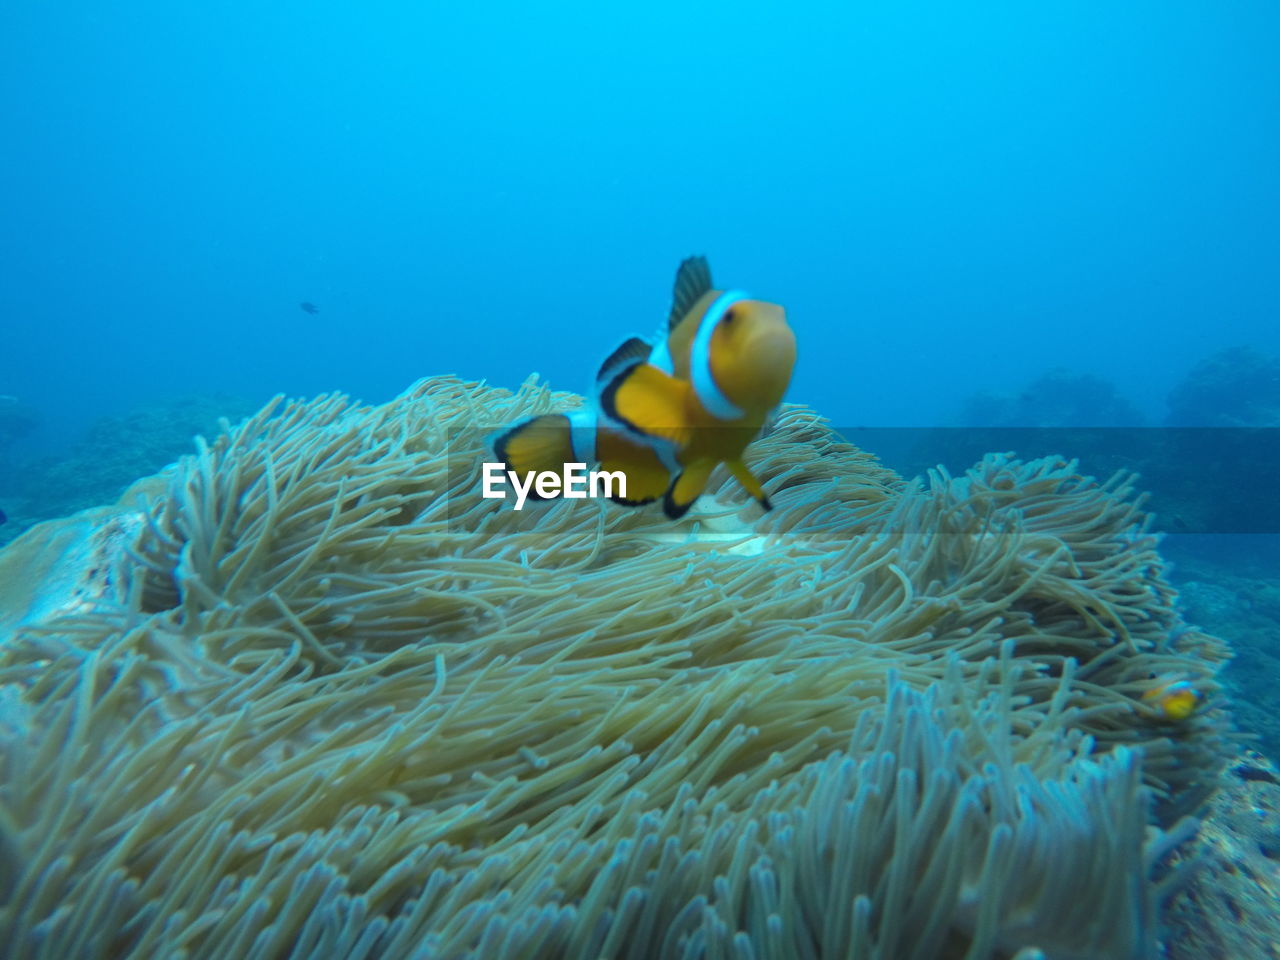 Fish swimming by sea anemone in sea